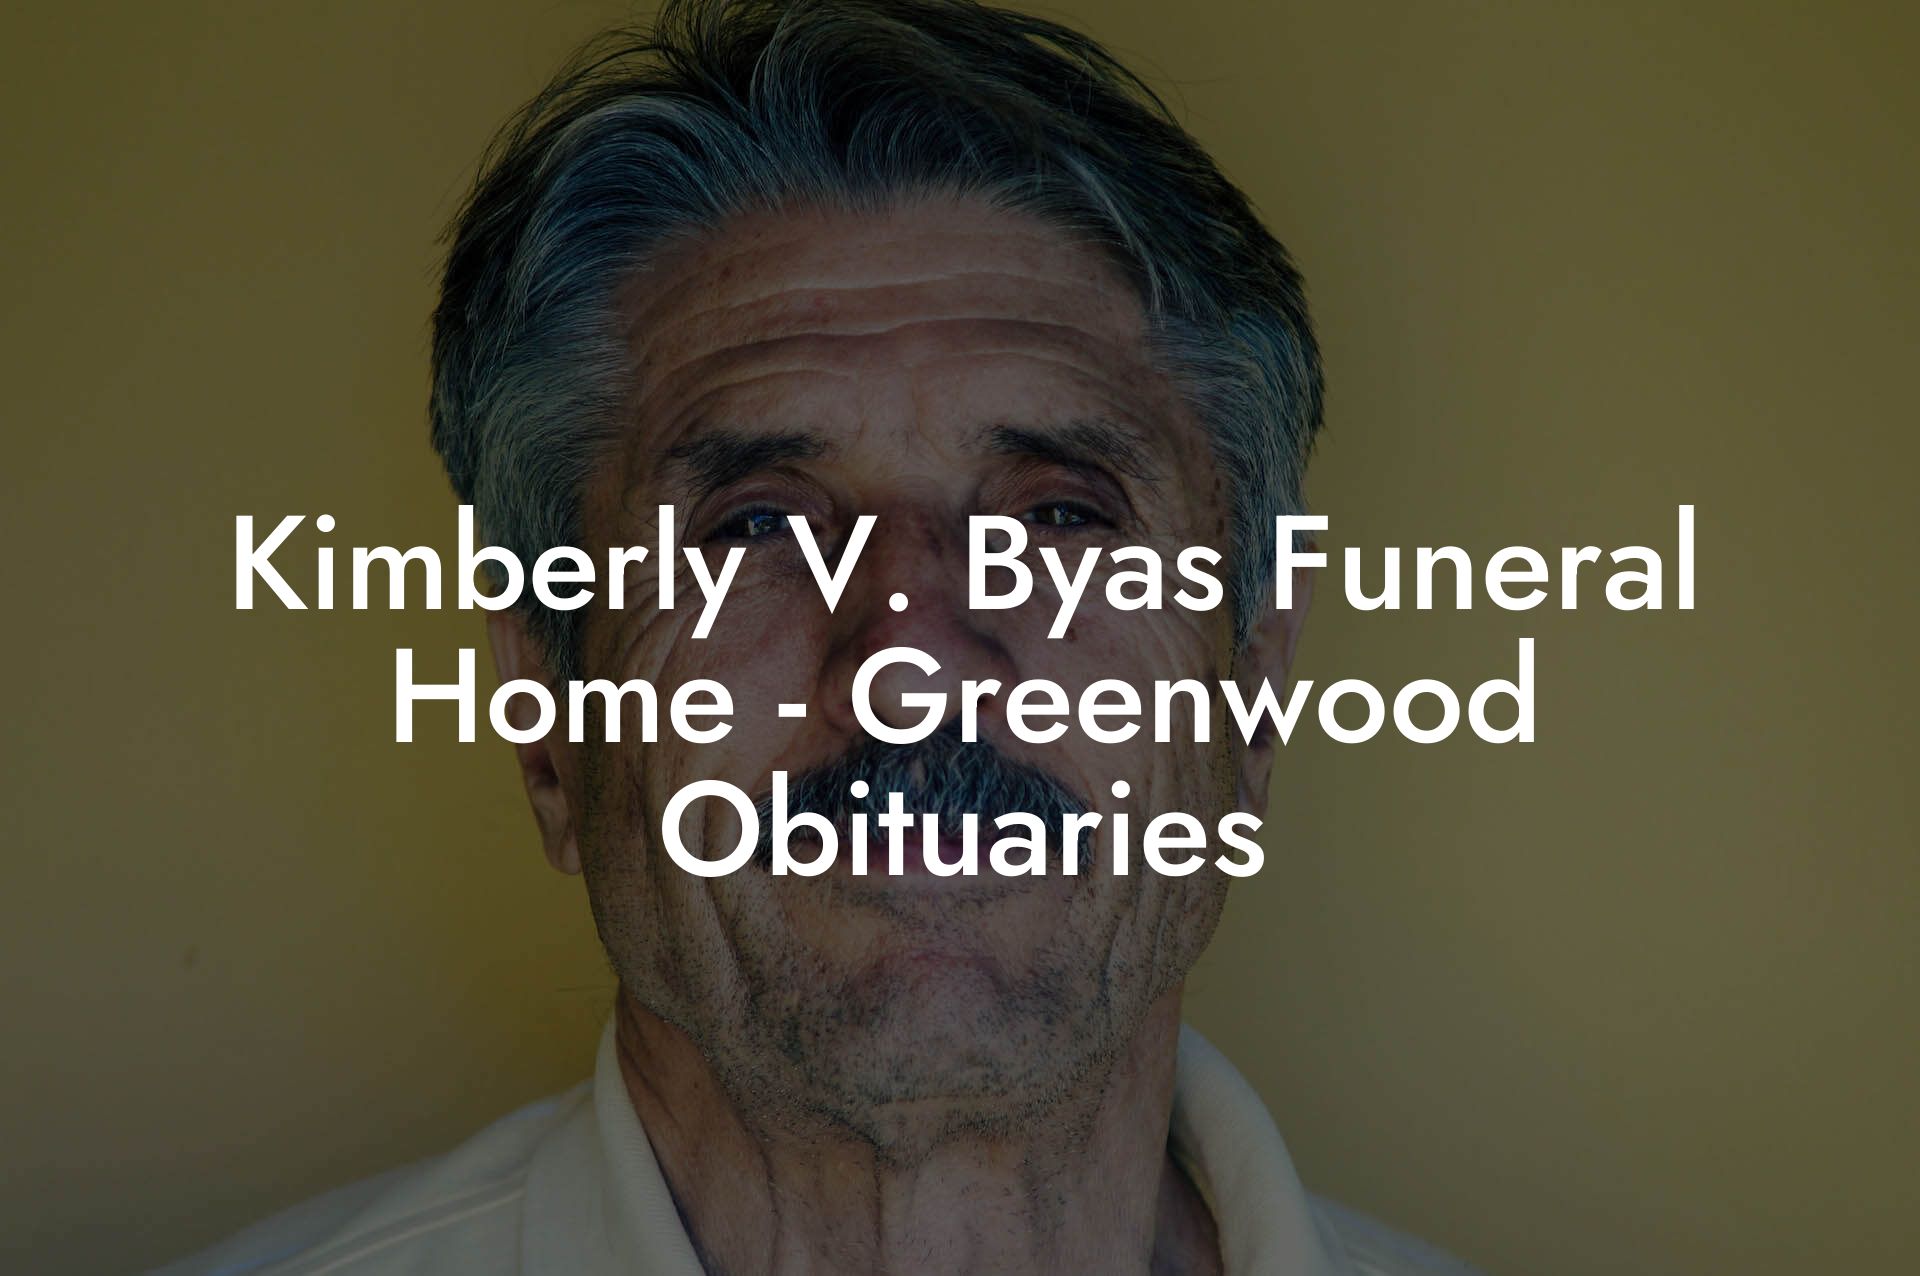 Kimberly V. Byas Funeral Home - Greenwood Obituaries